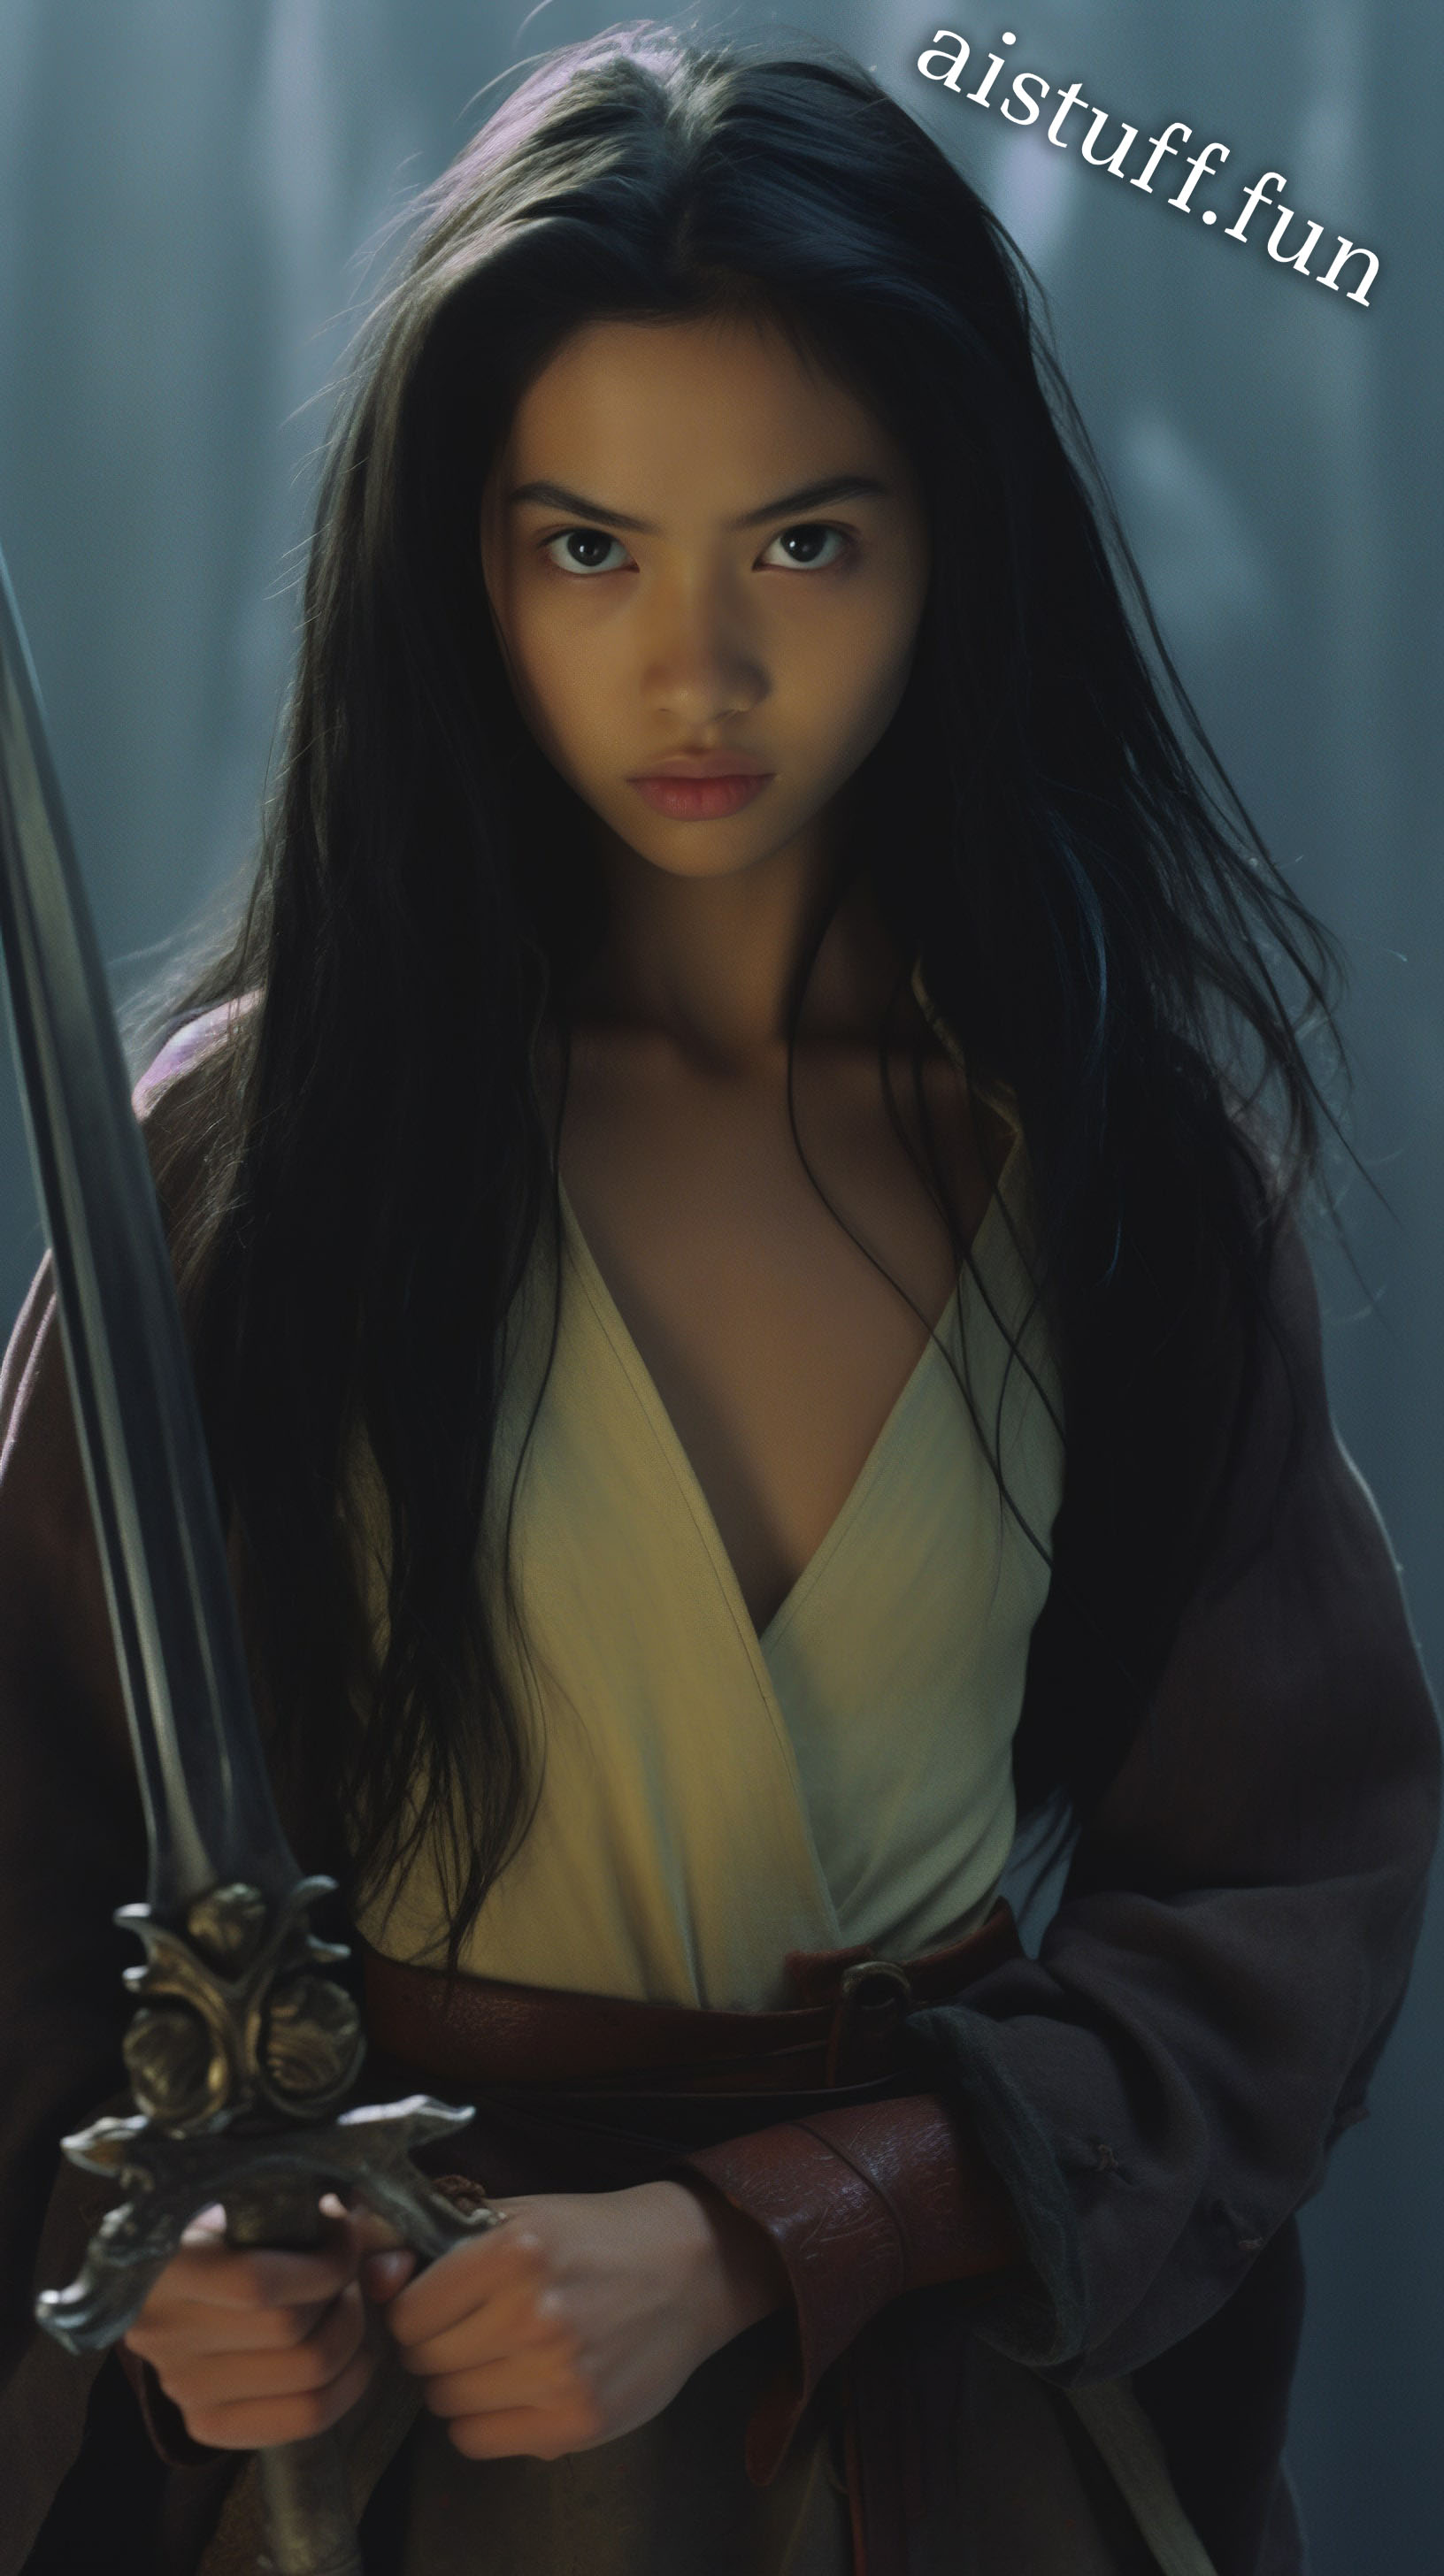 photorealistic image of Princess Raya holding a sword